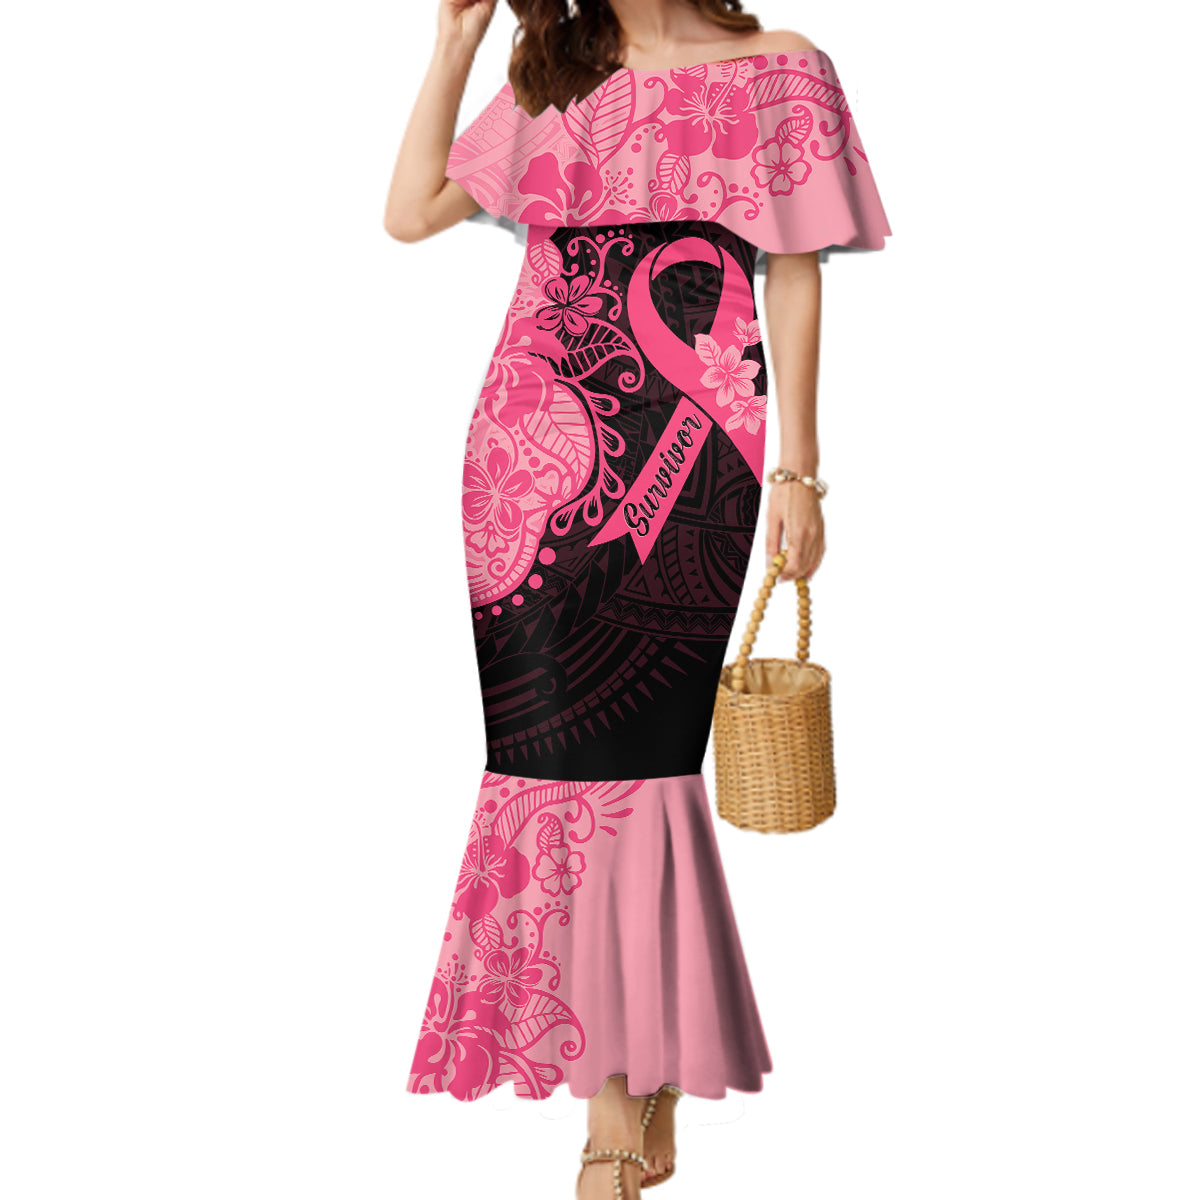 polynesian-mermaid-dress-plumeria-breast-cancer-awareness-survivor-ribbon-pink